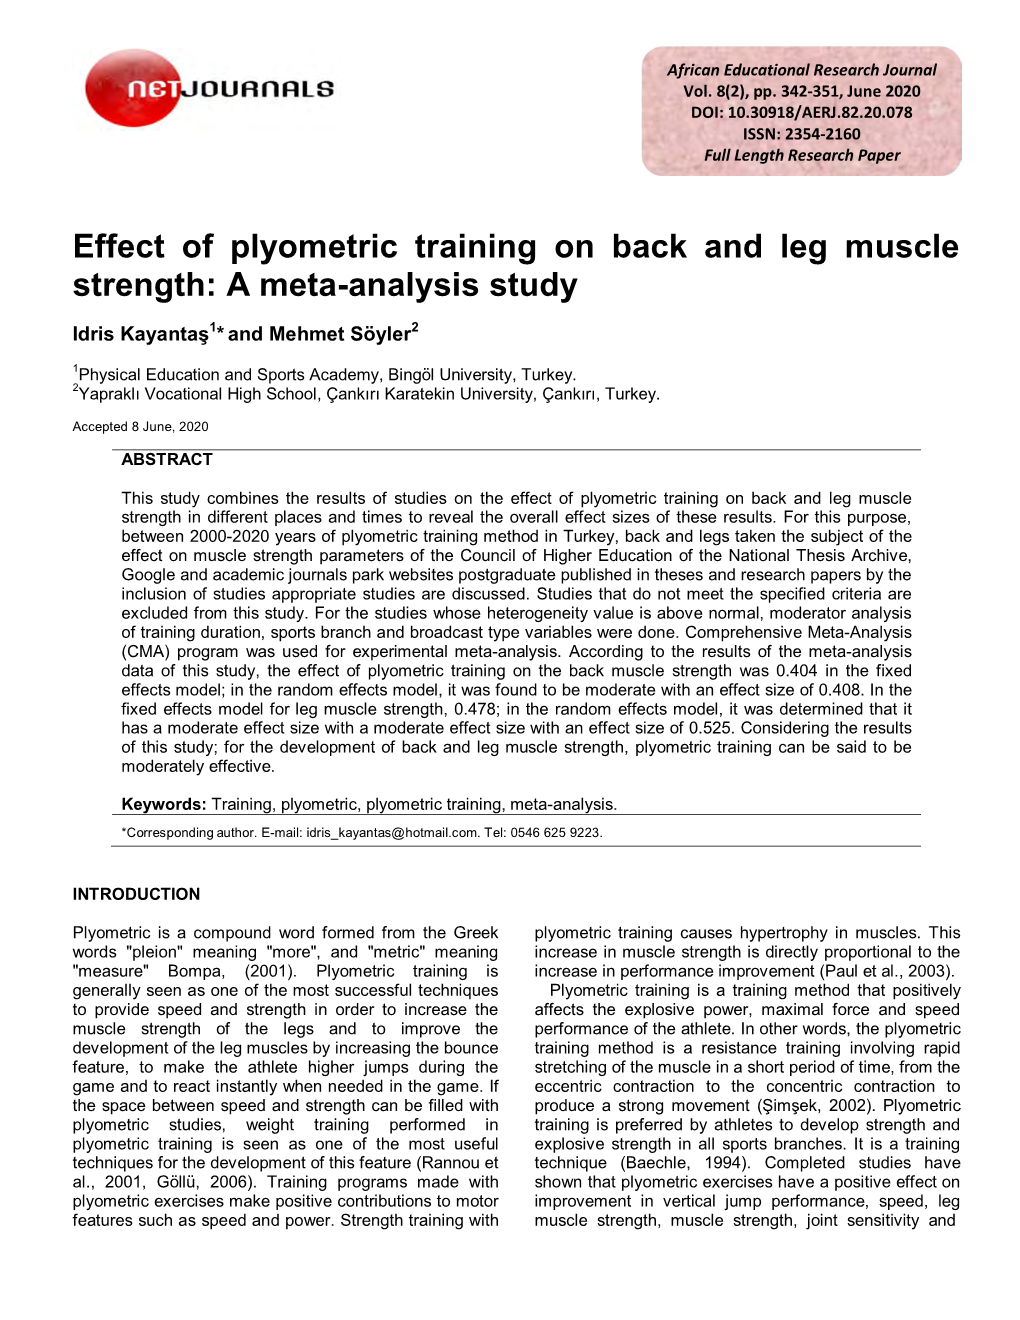 Effect of Plyometric Training on Back and Leg Muscle Strength: a Meta-Analysis Study